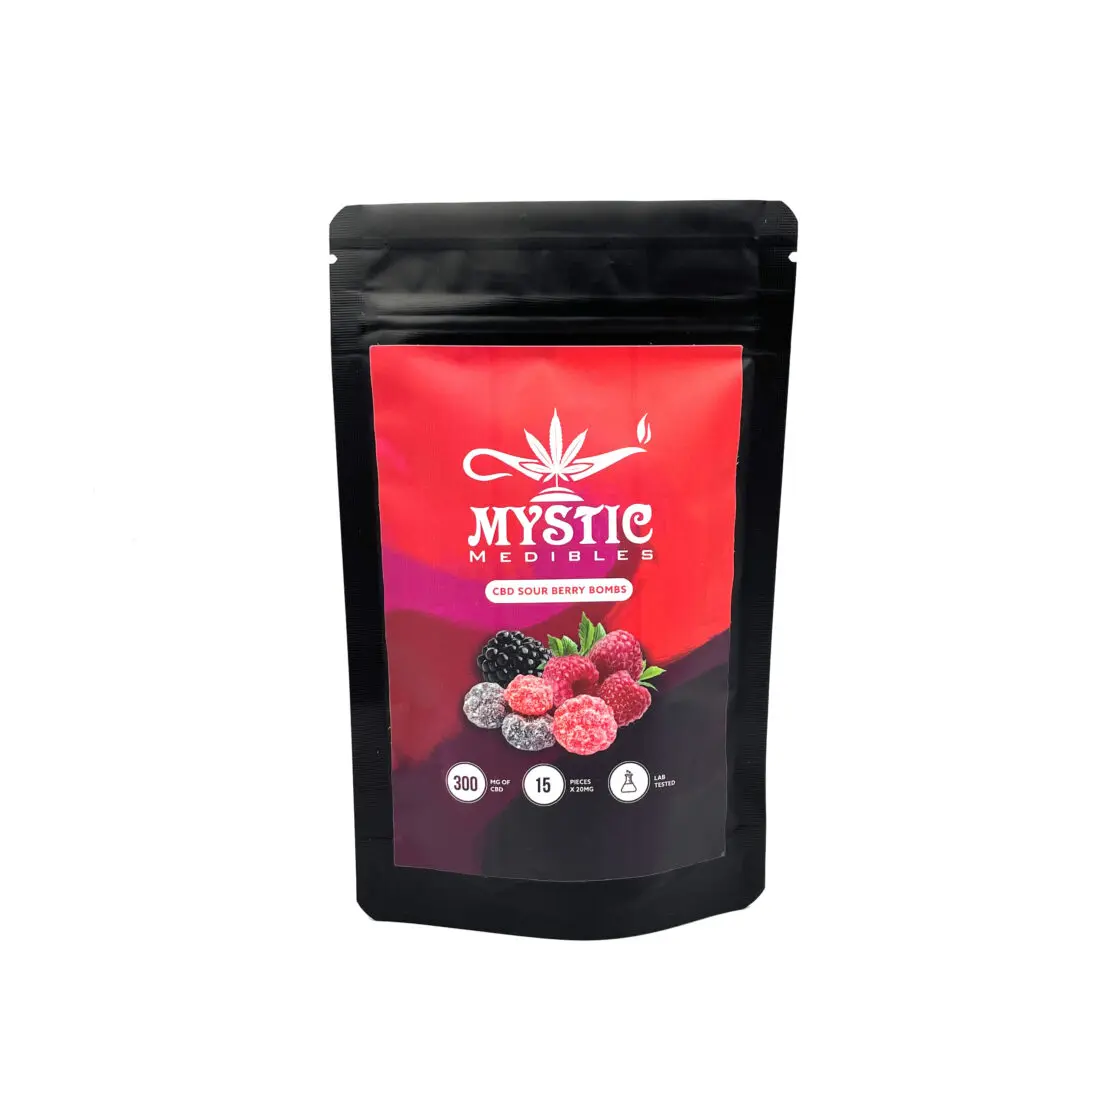 Mystic Medibles – Cbd Sour Berry Bombs